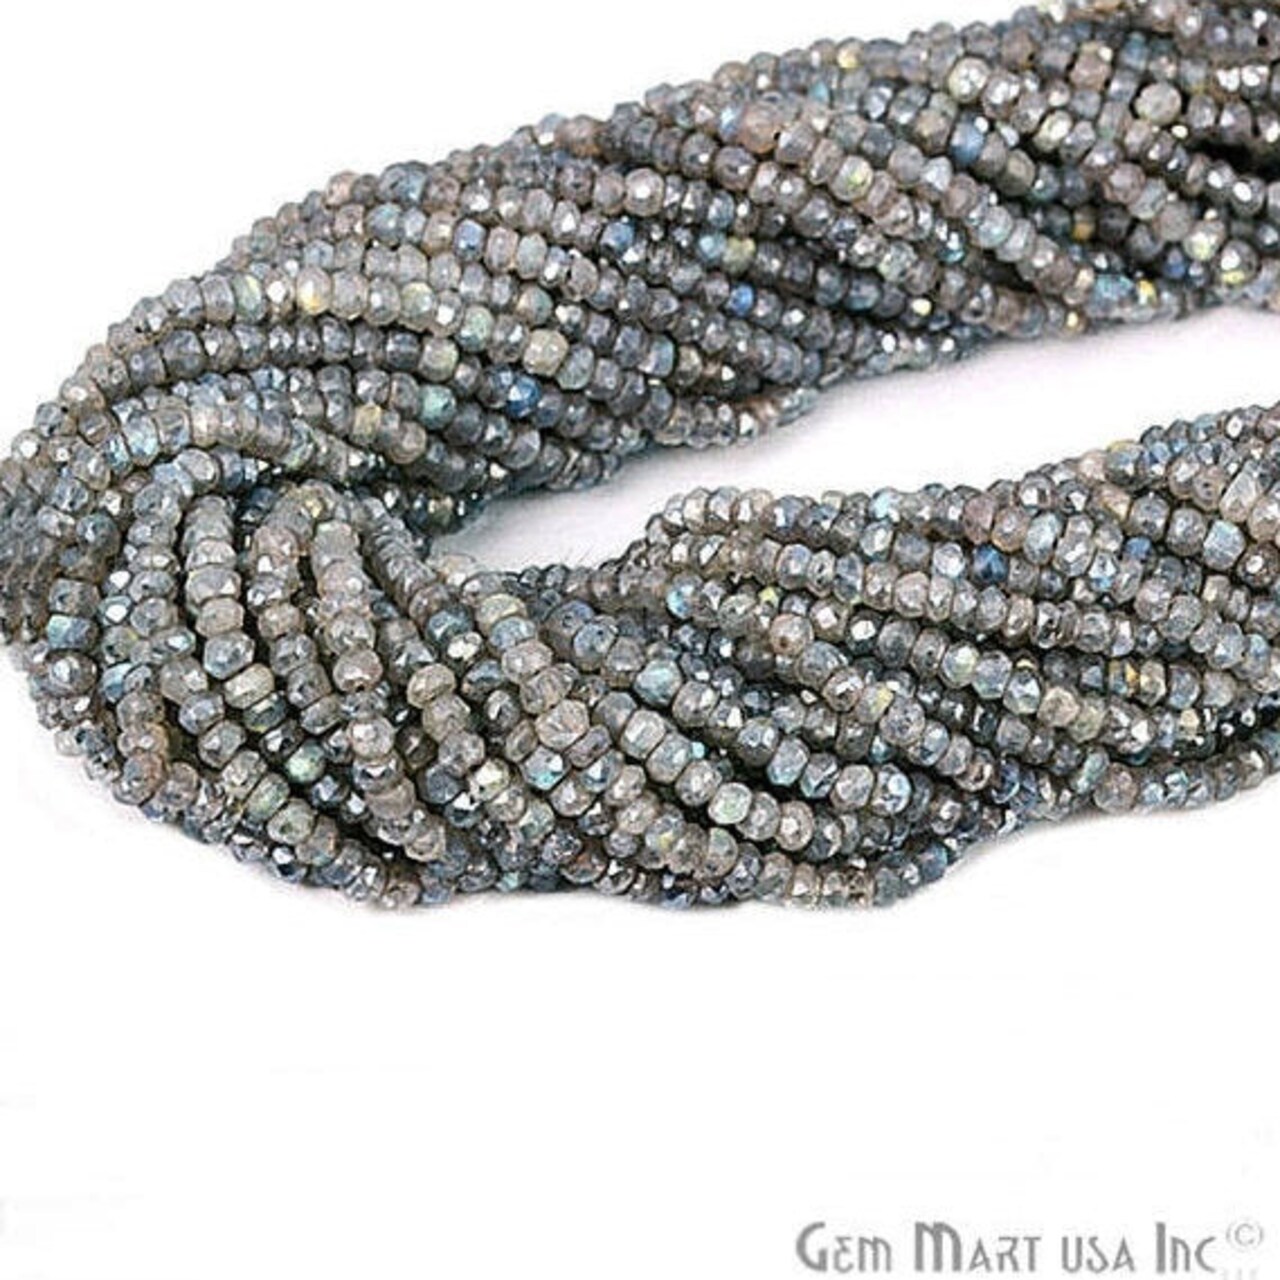 Mistique Labradorite Rondelle Beads, 13 Inch Bead Strands, Natural Strung Gemstone, Grade AAA Drilled Round Beads, 3-4mm, Faceted, GemMartUSA (RLML-70002)